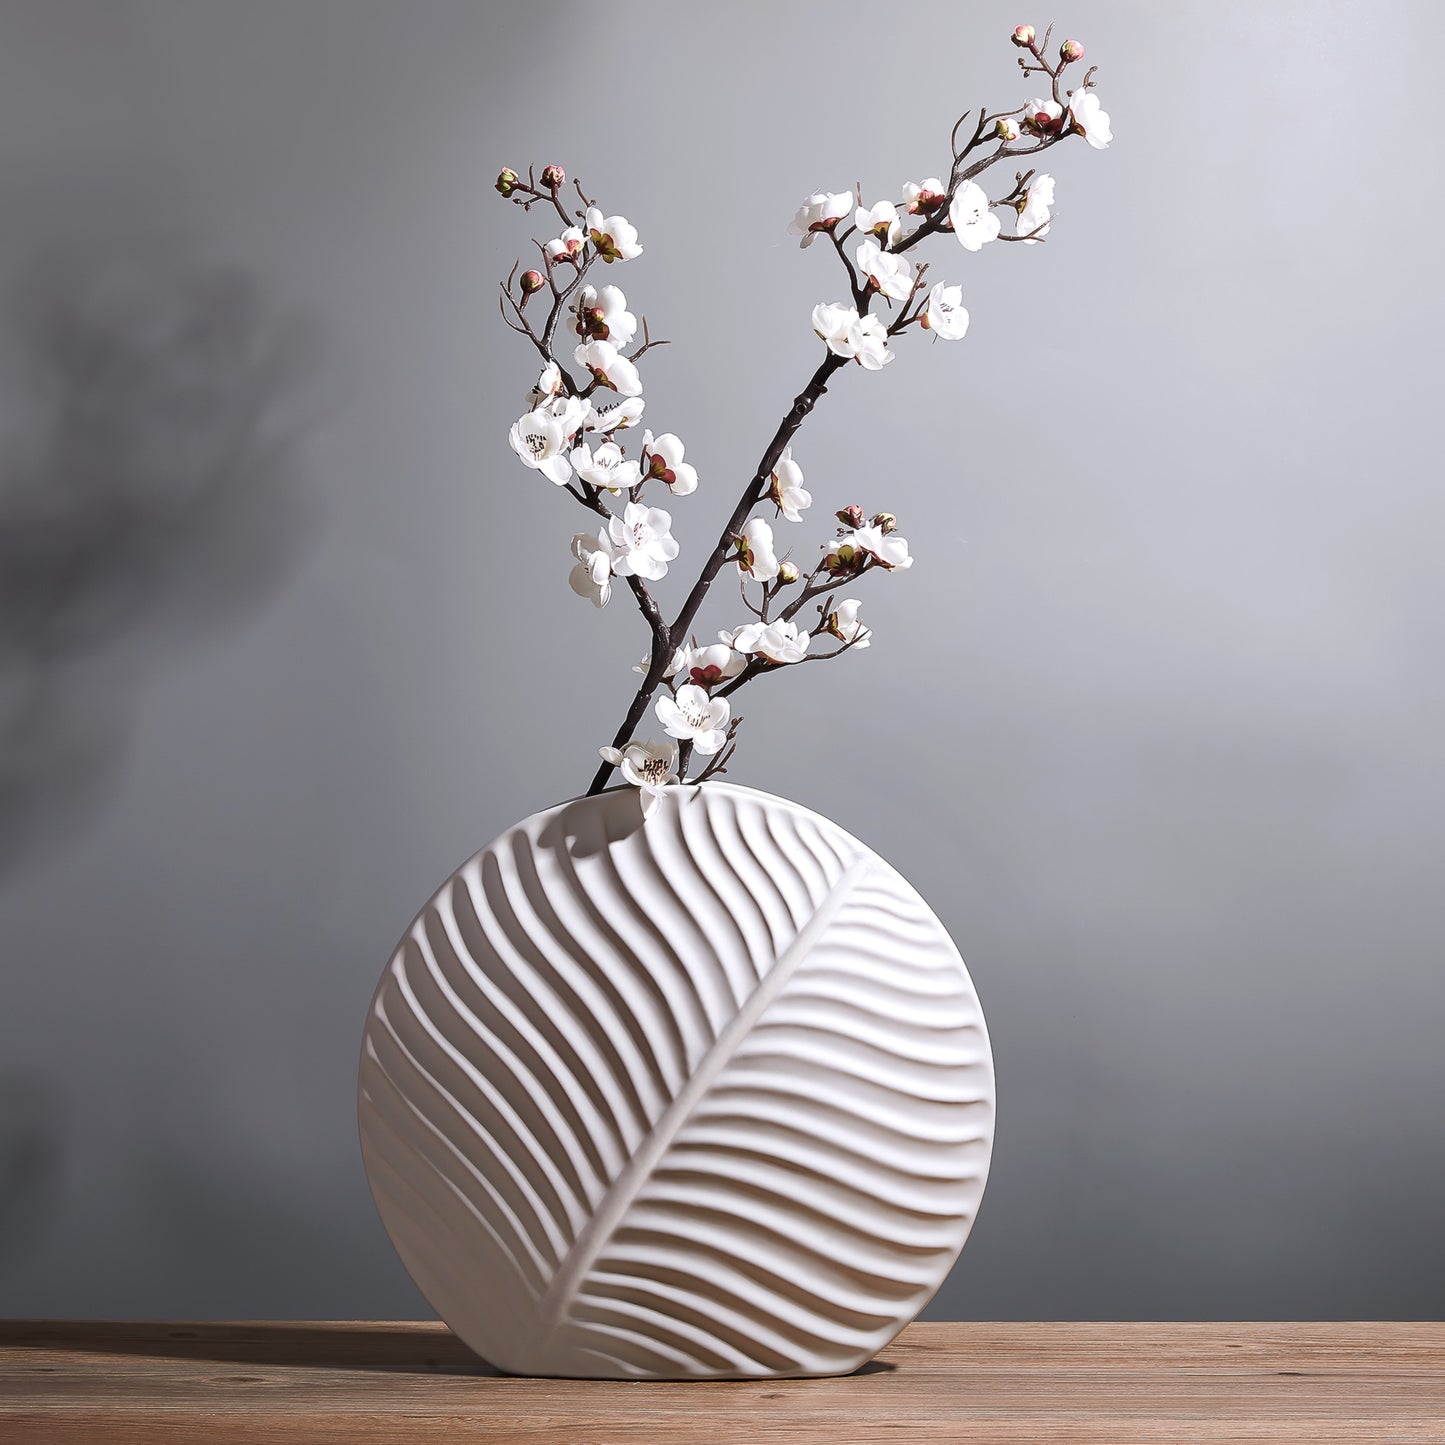 MIAJO White Ceramic Vase with Leaves Pattern Embossed